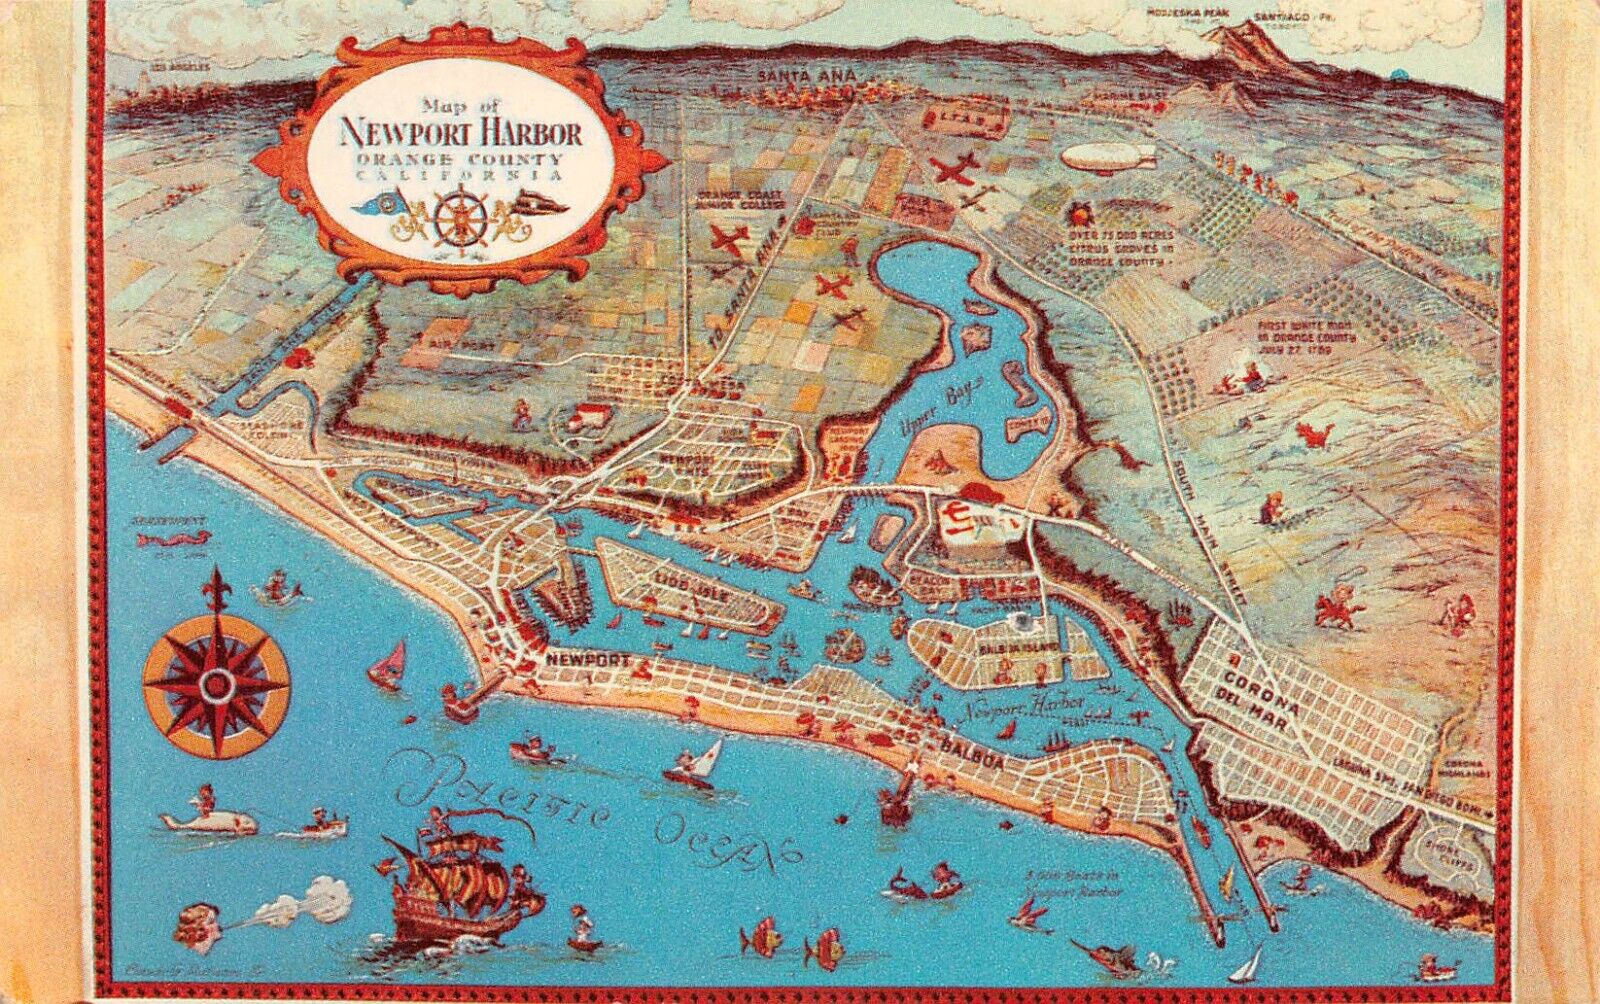 NEWPORT HARBOR, Orange County CA ~ ILLUSTRATED MAP Cartograph 1954 Postcard